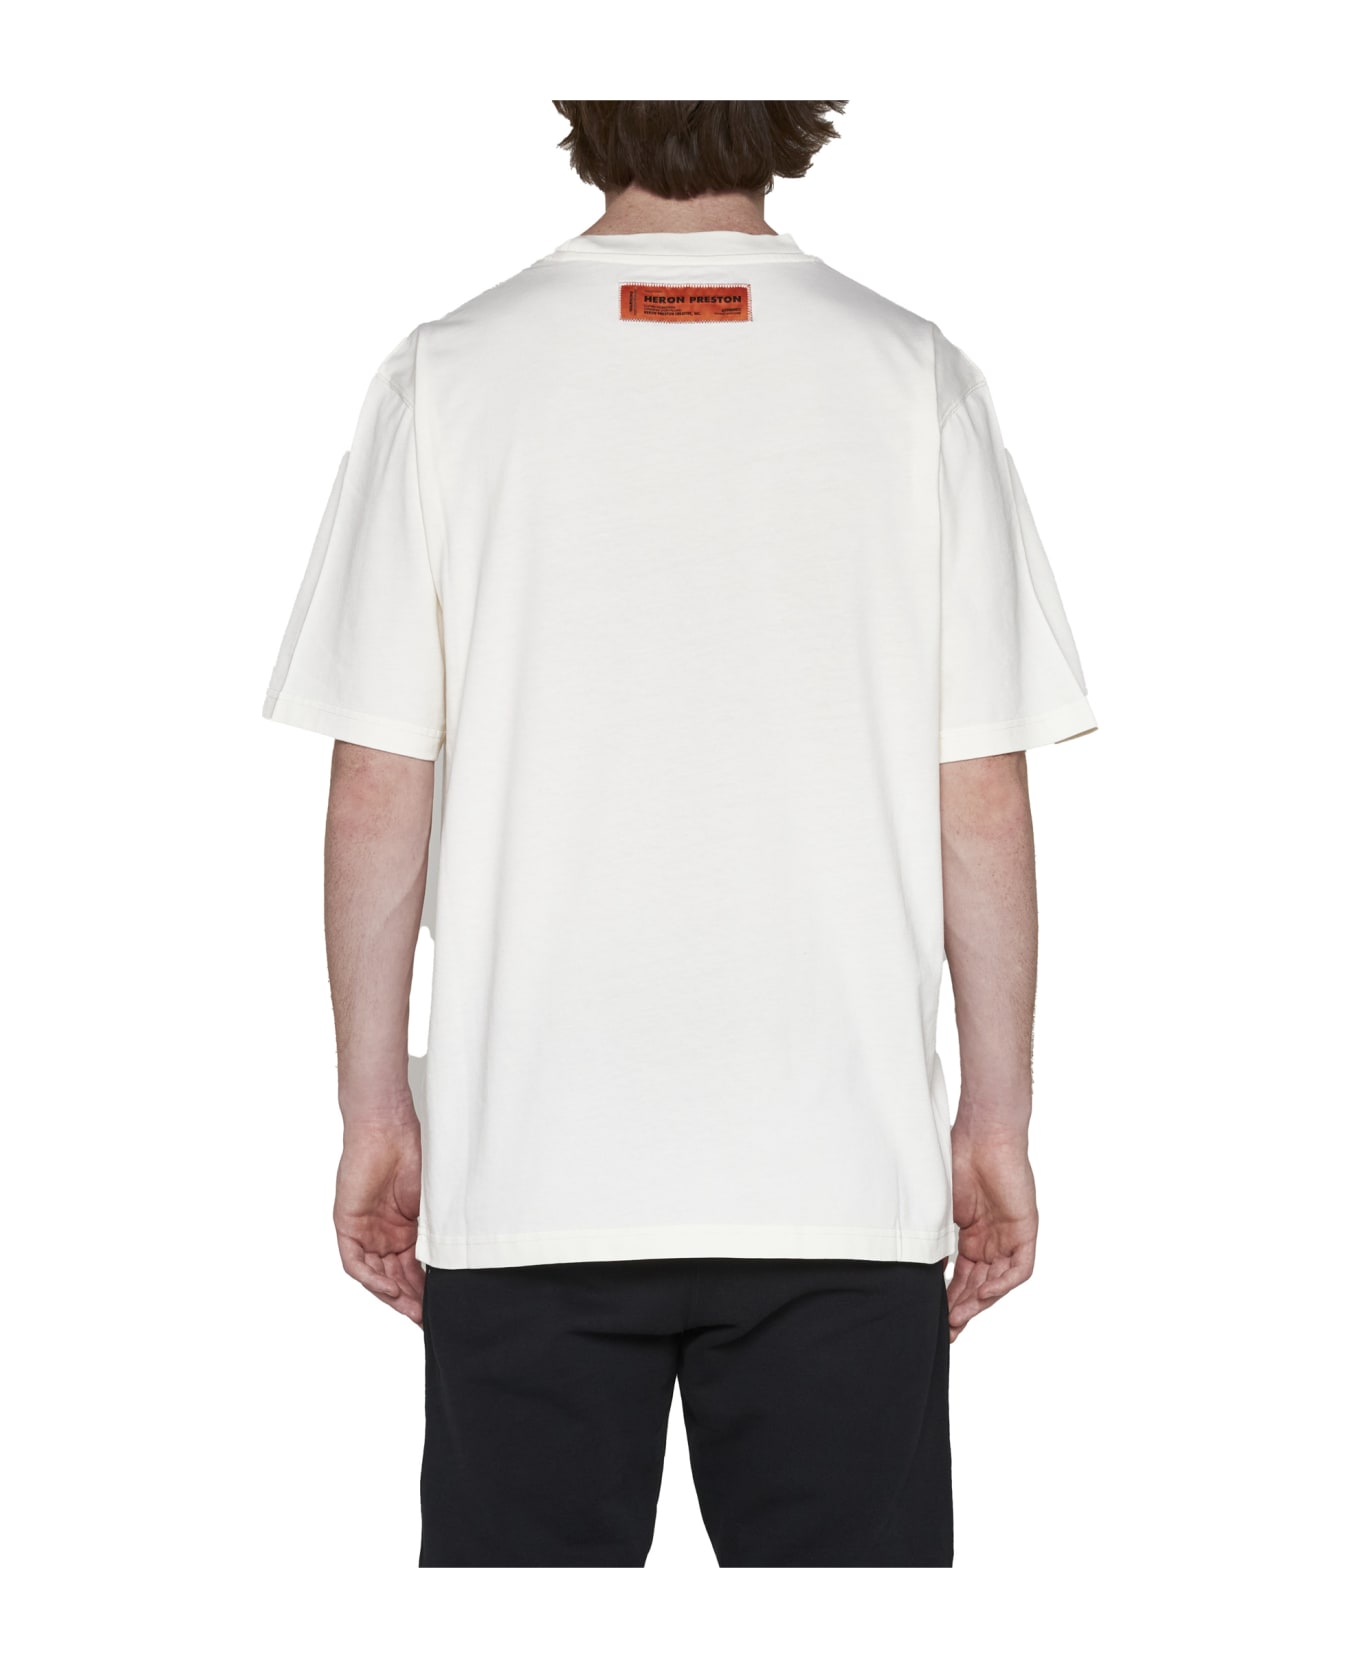 HERON PRESTON Hpny Embroidered T-shirt - White/black